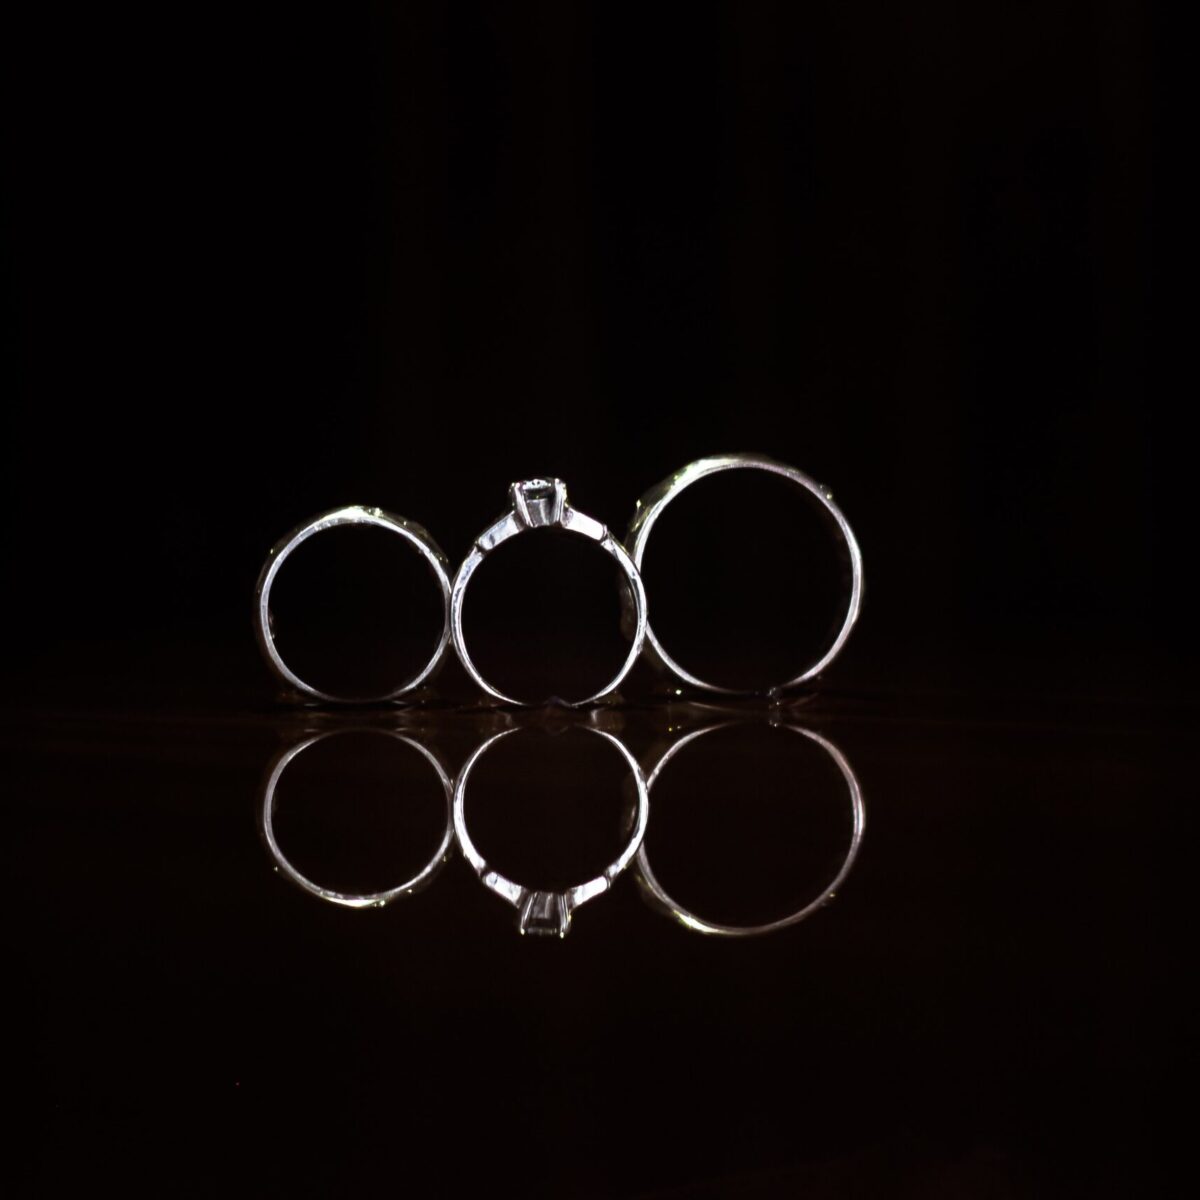 jewellery translations into Russian three rings